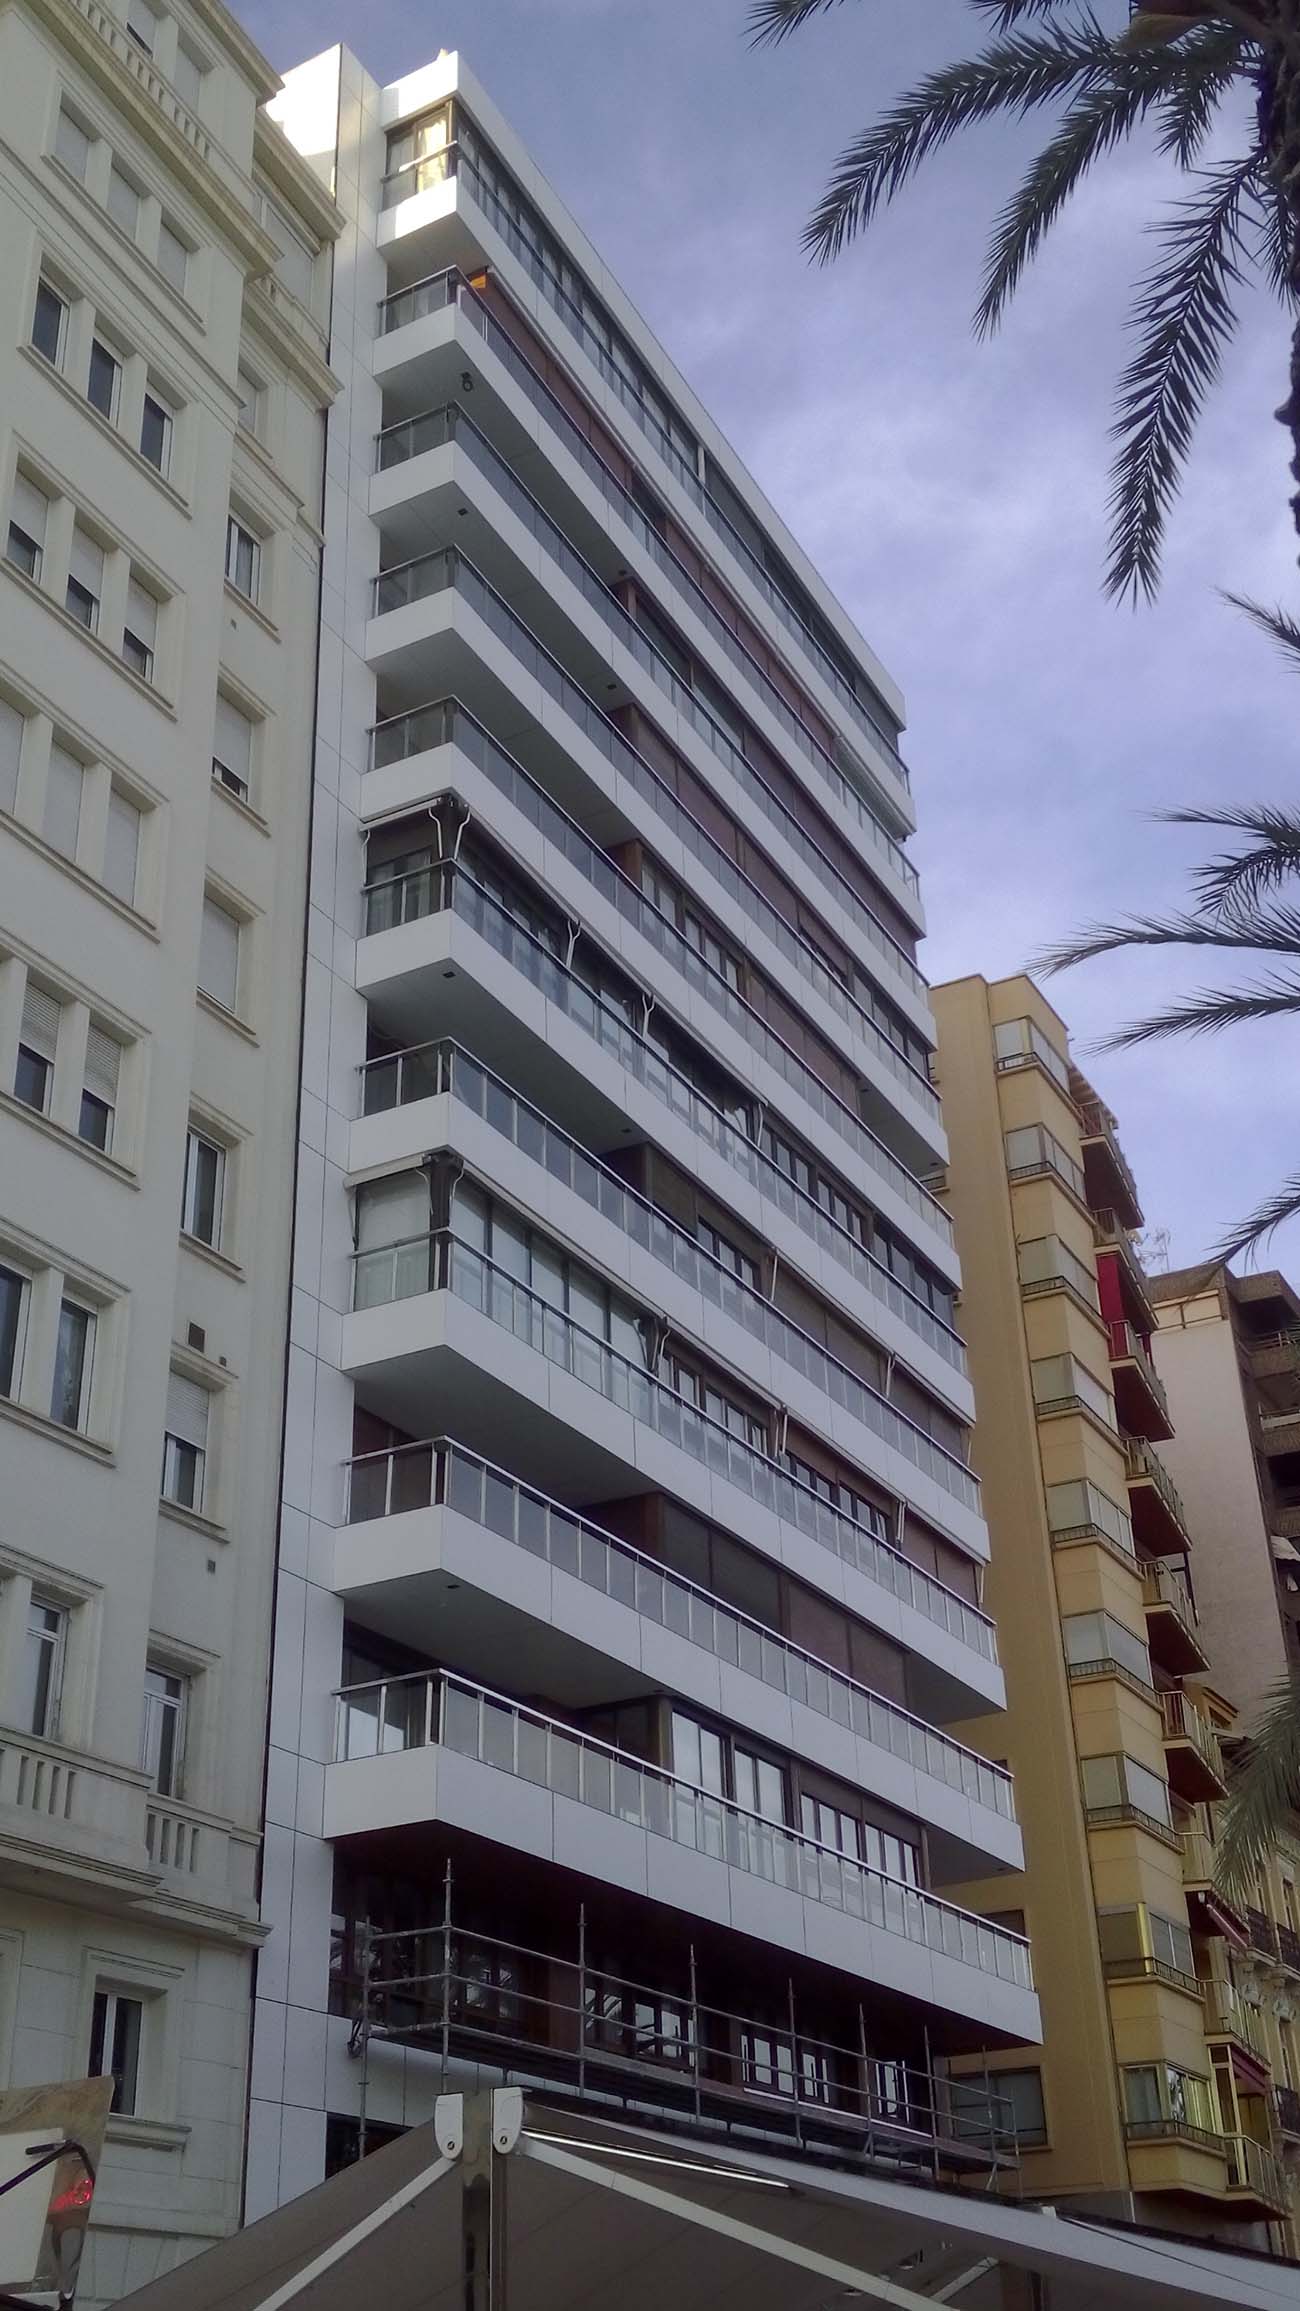 Victoria Building, Alicante (after) | Courtesy of Trespa